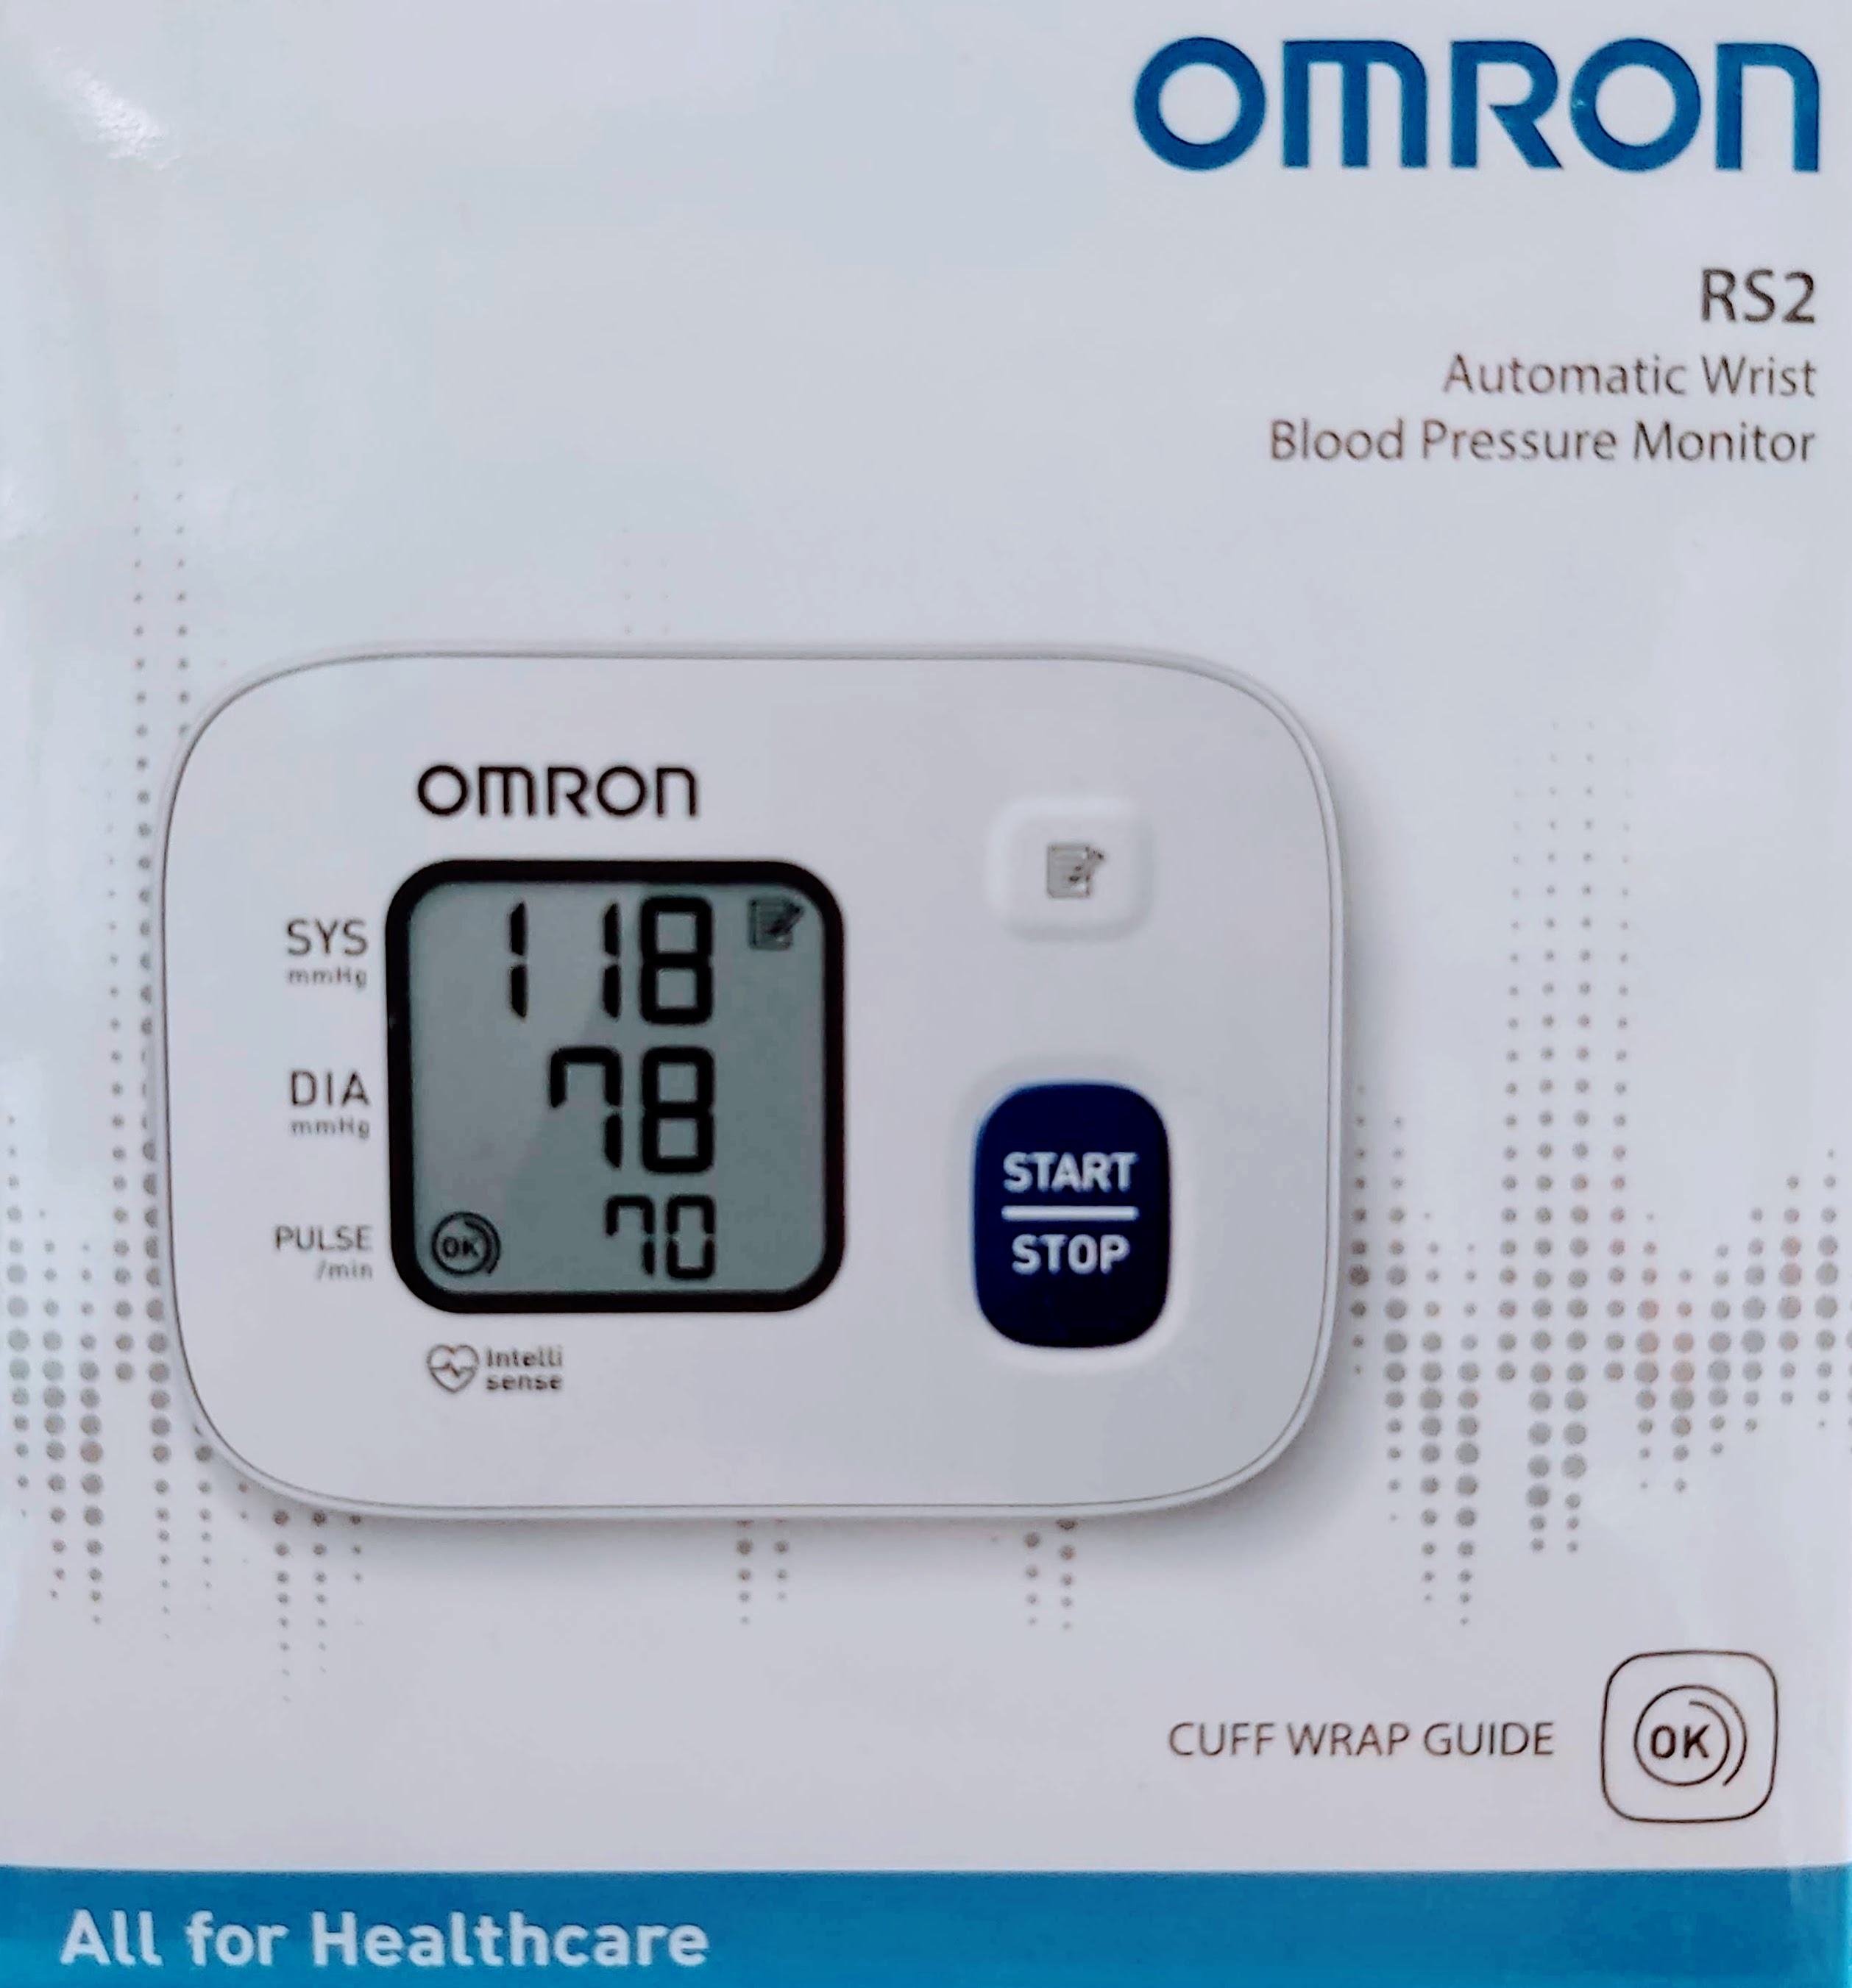 TENSIOMETRO OMRON RS2 DIGITAL MUÑECA Comprar Omron BP652 Wrist Automatic blood pressure. TENSIOMETRE WRIST RS2 Omron es un monitor de presión arterial ideal para pacientes hipertensos